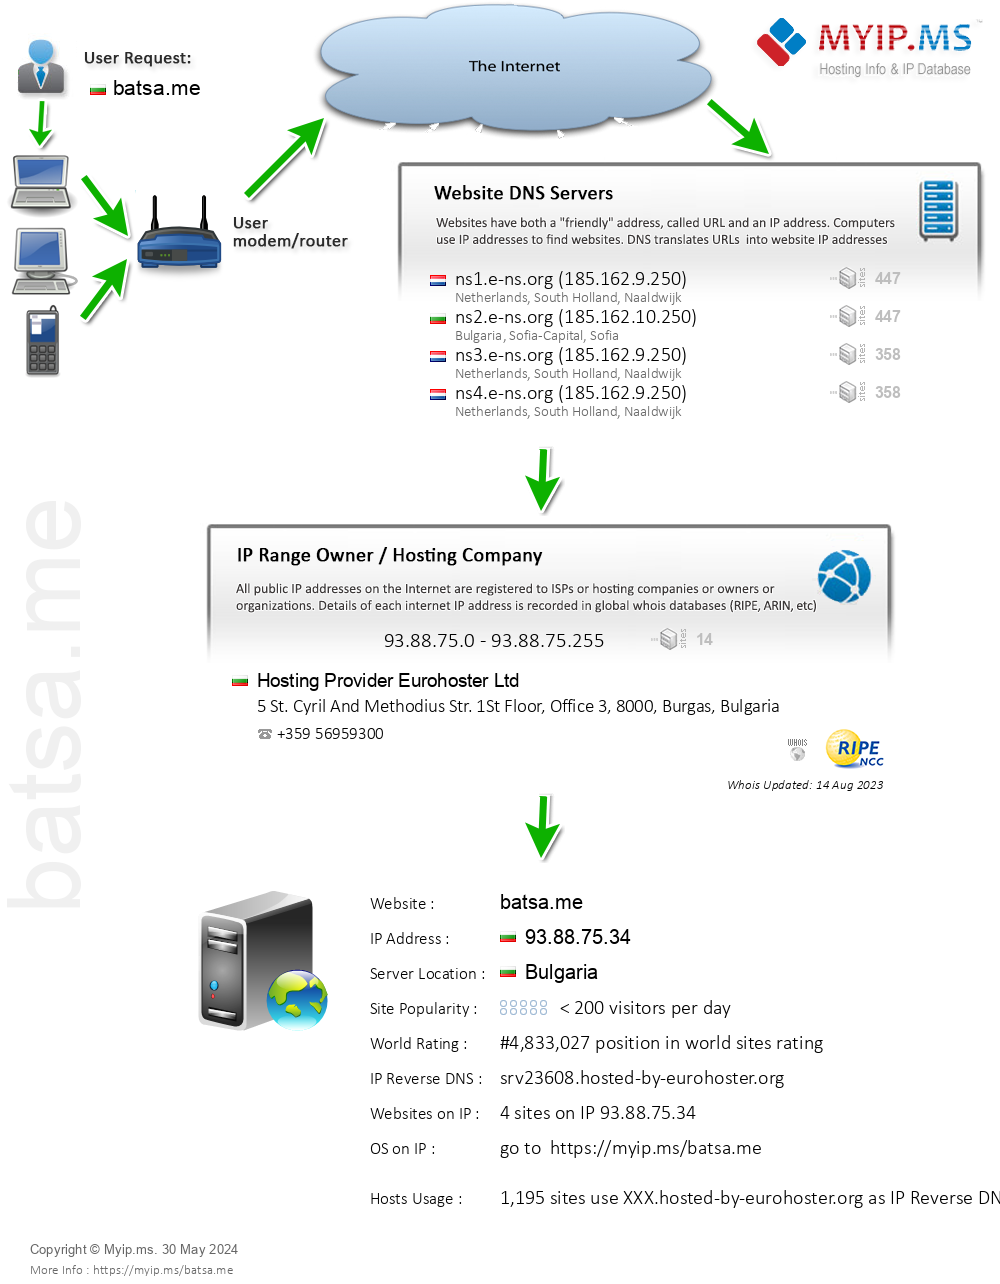 Batsa.me - Website Hosting Visual IP Diagram